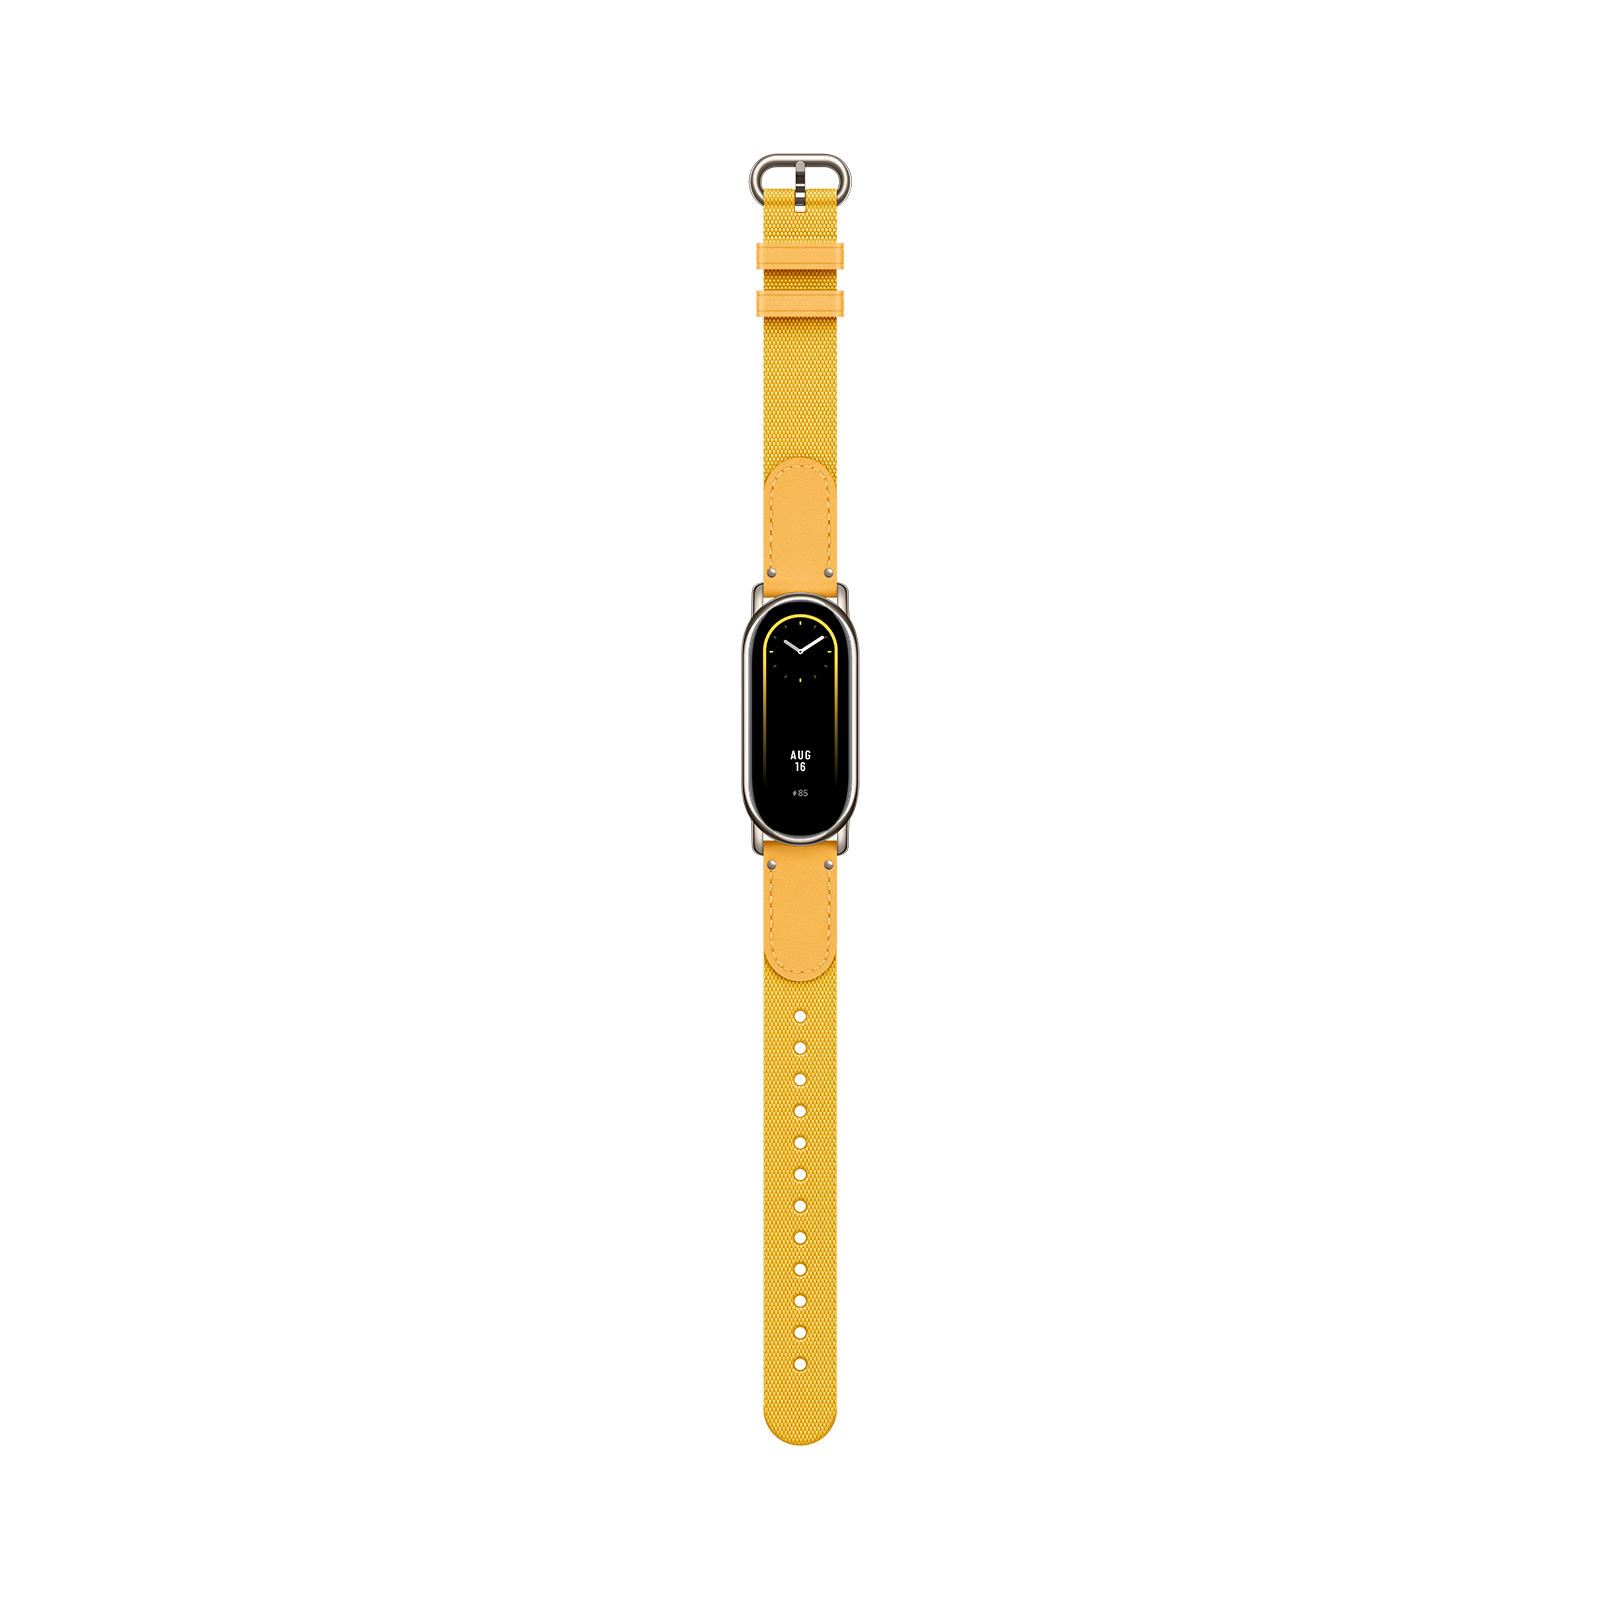 Xiaomi Smart Band 8 Braided Strap Yellow